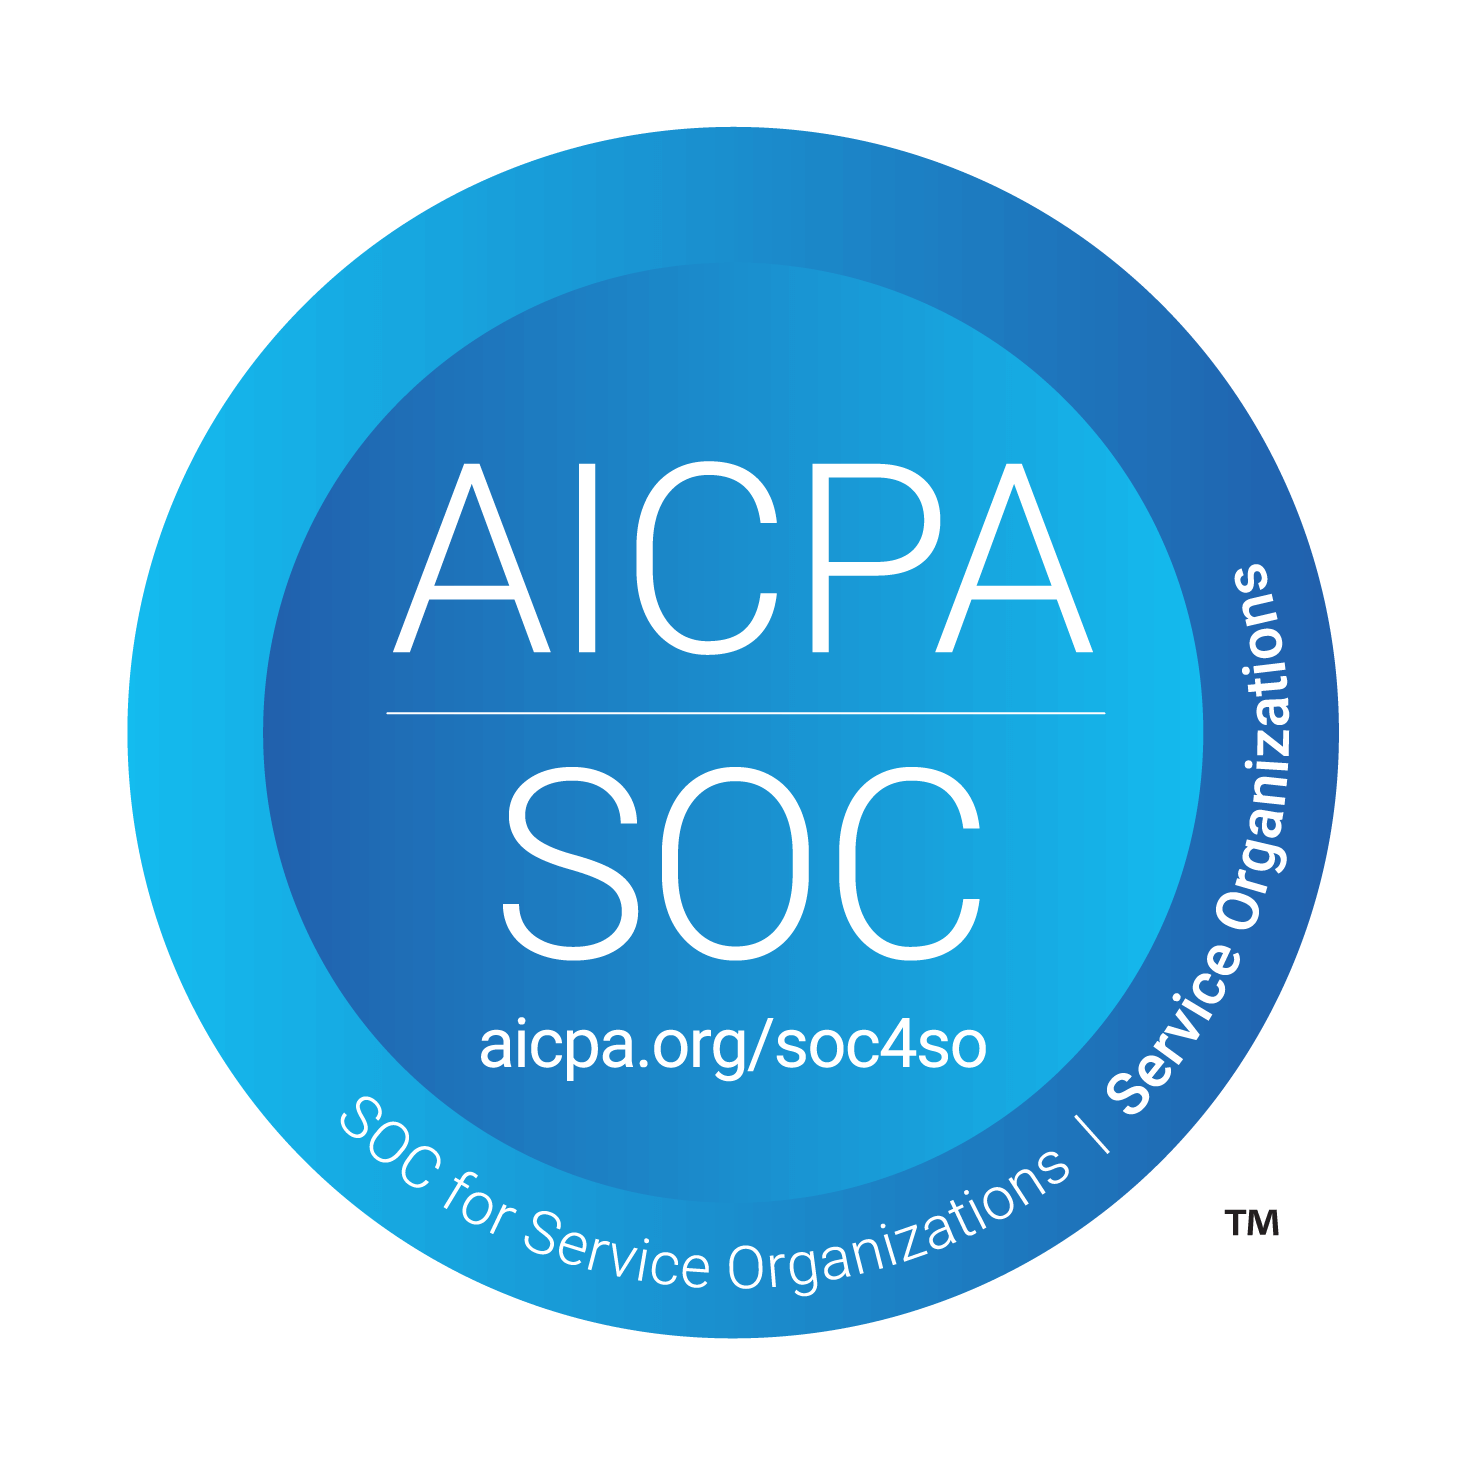 aicpa-soc-logo-freelogovectors.net_